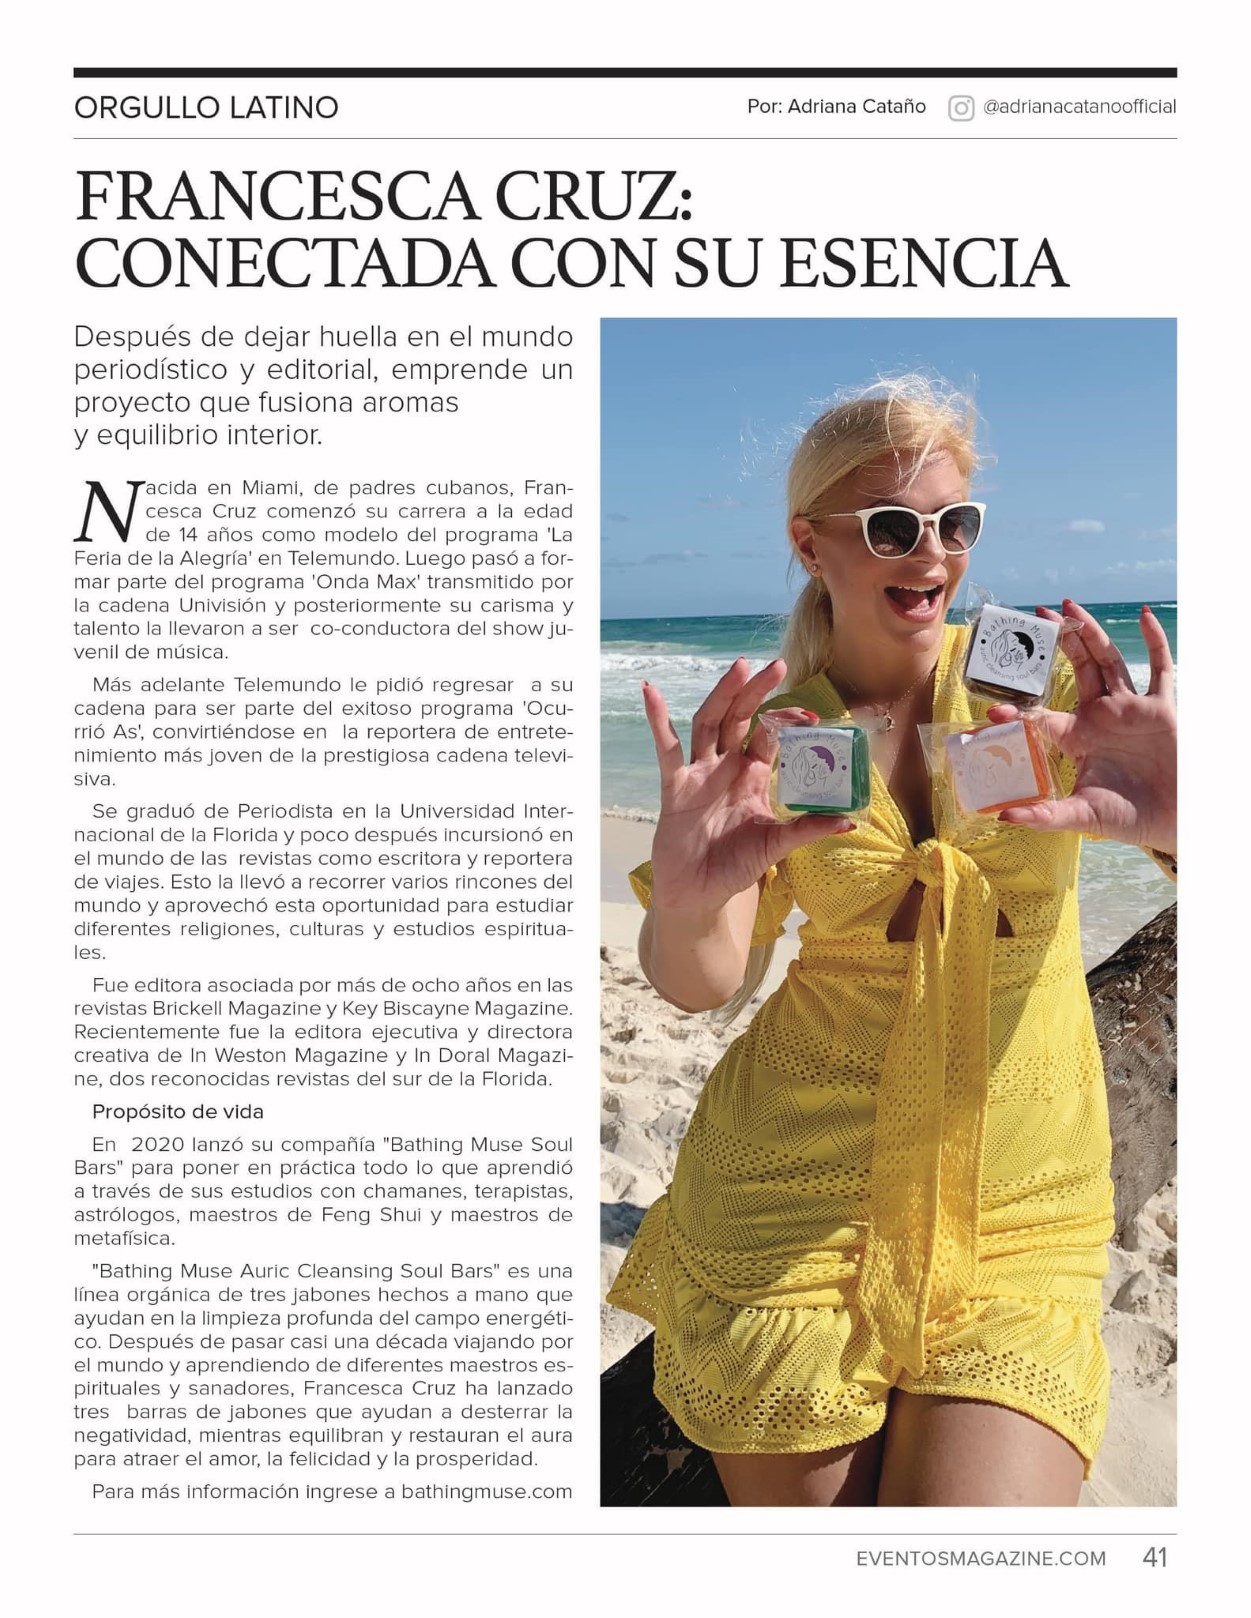 Francesca Cruz in Eventos Magazine